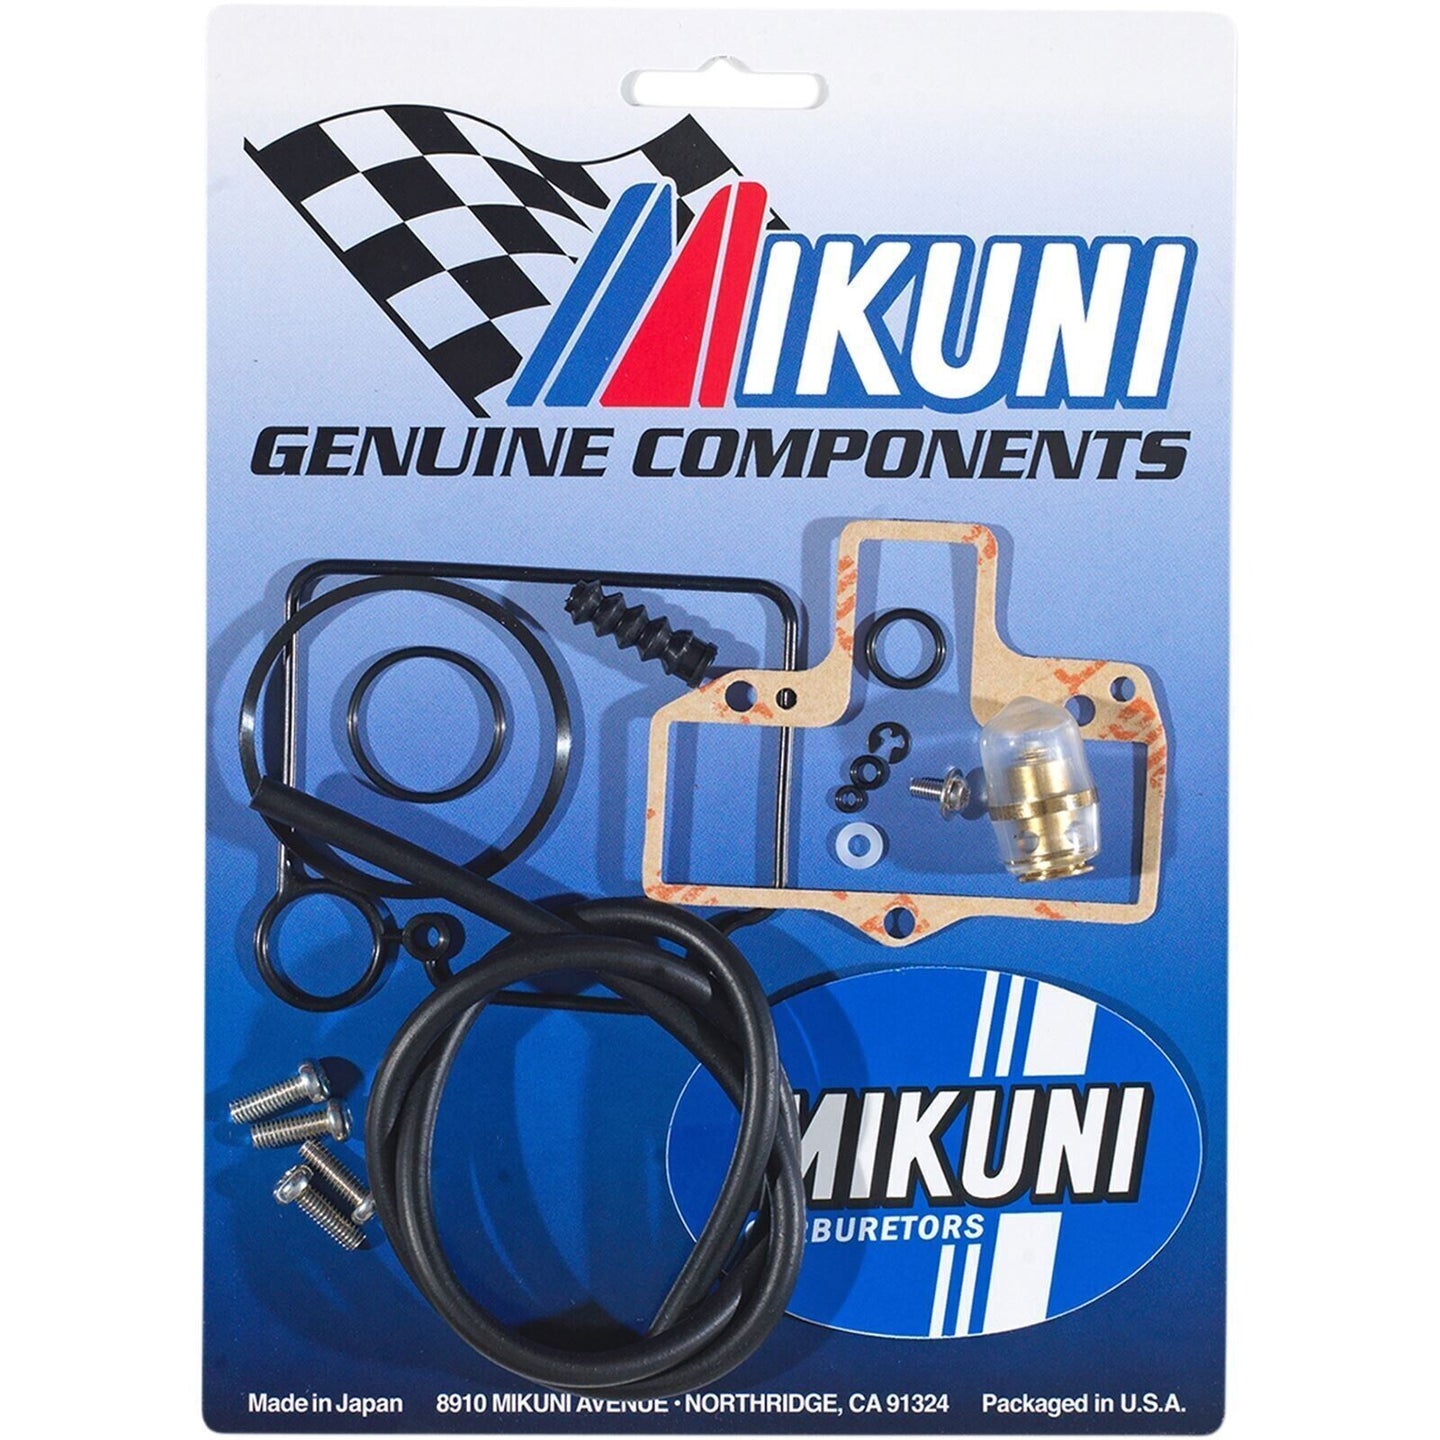 Genuine Mikuni HSR Series 48 Carburetor Rebuild Kit for Harley | KHS-031